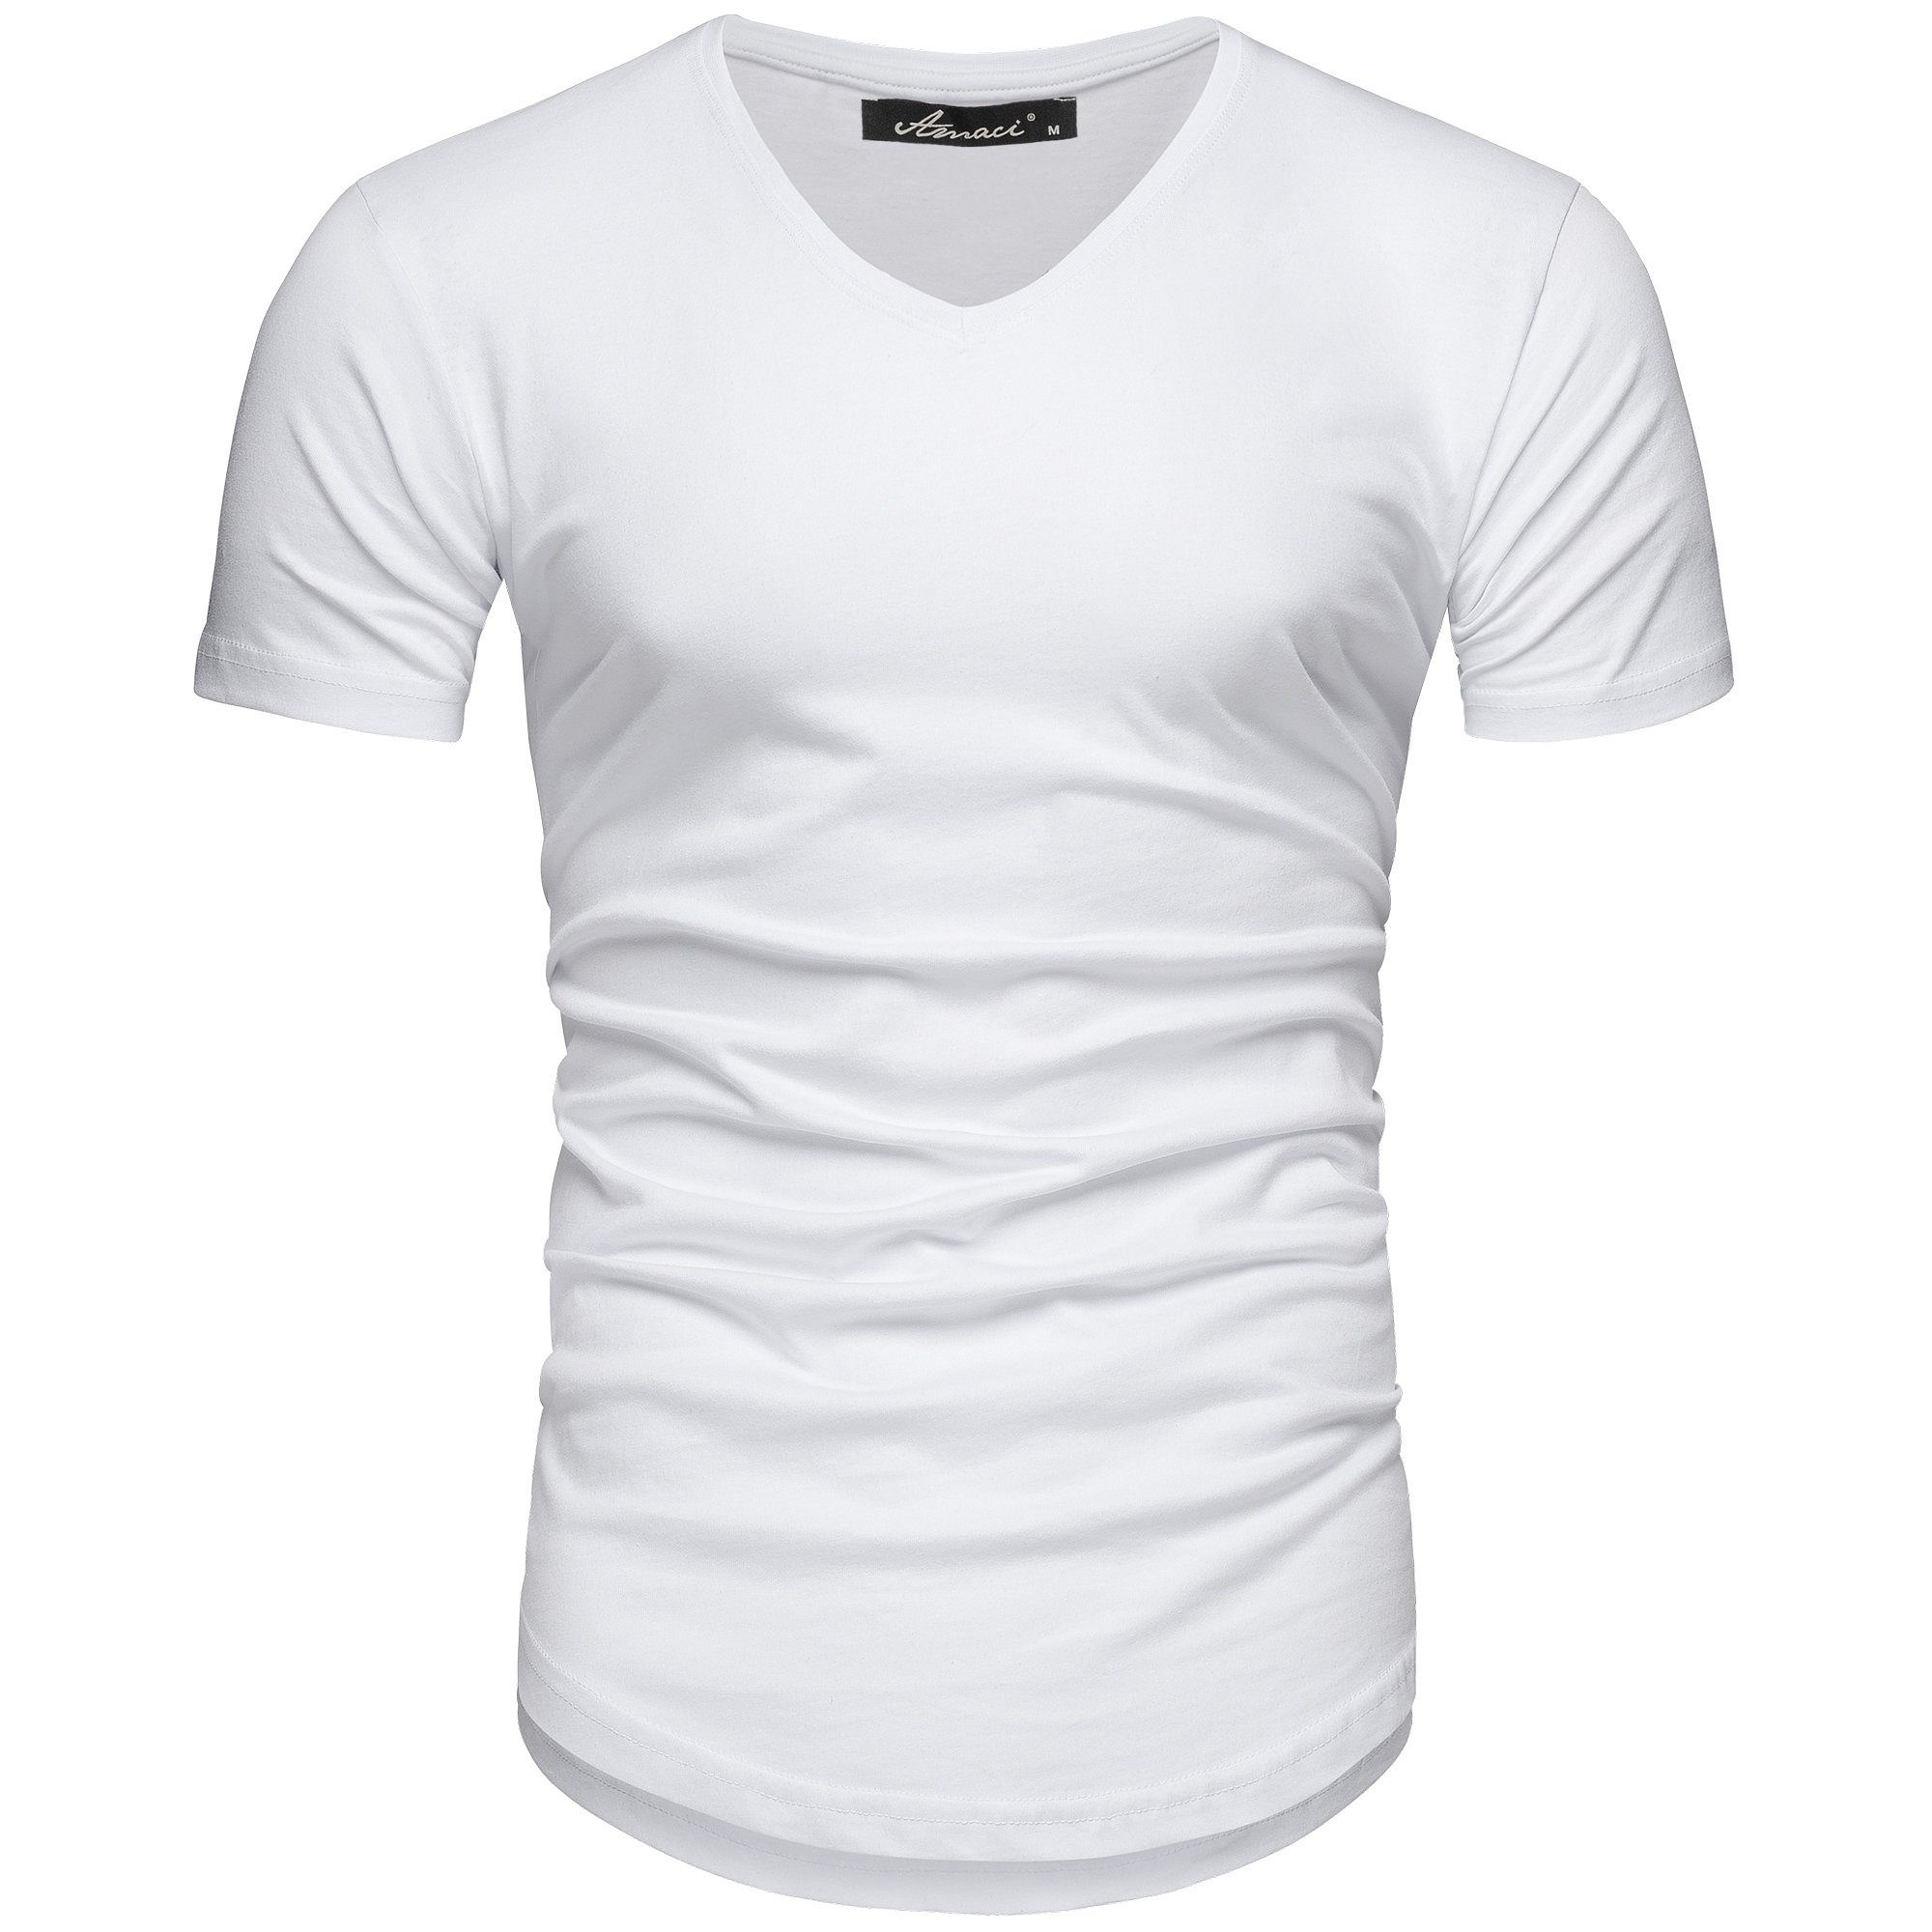 Amaci&Sons T-Shirt BELLEVUE Basic Oversize T-Shirt mit V-Ausschnitt Herren Oversize Vintage V-Neck Basic V-Ausschnitt Shirt Weiß